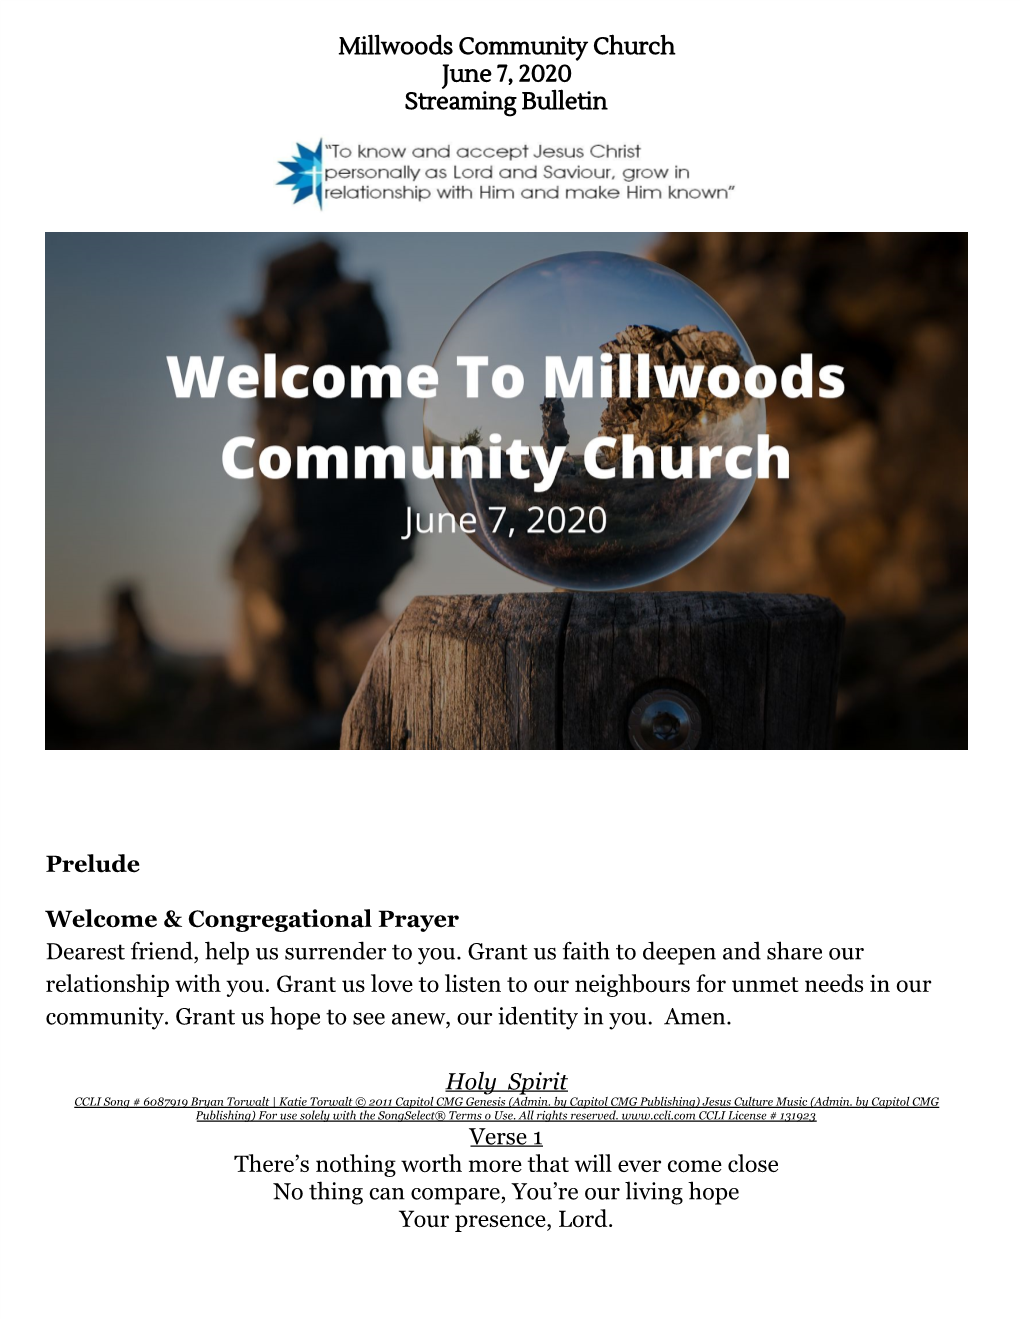 Millwoods Community Church June 7, 2020 Streaming Bulletin Prelude